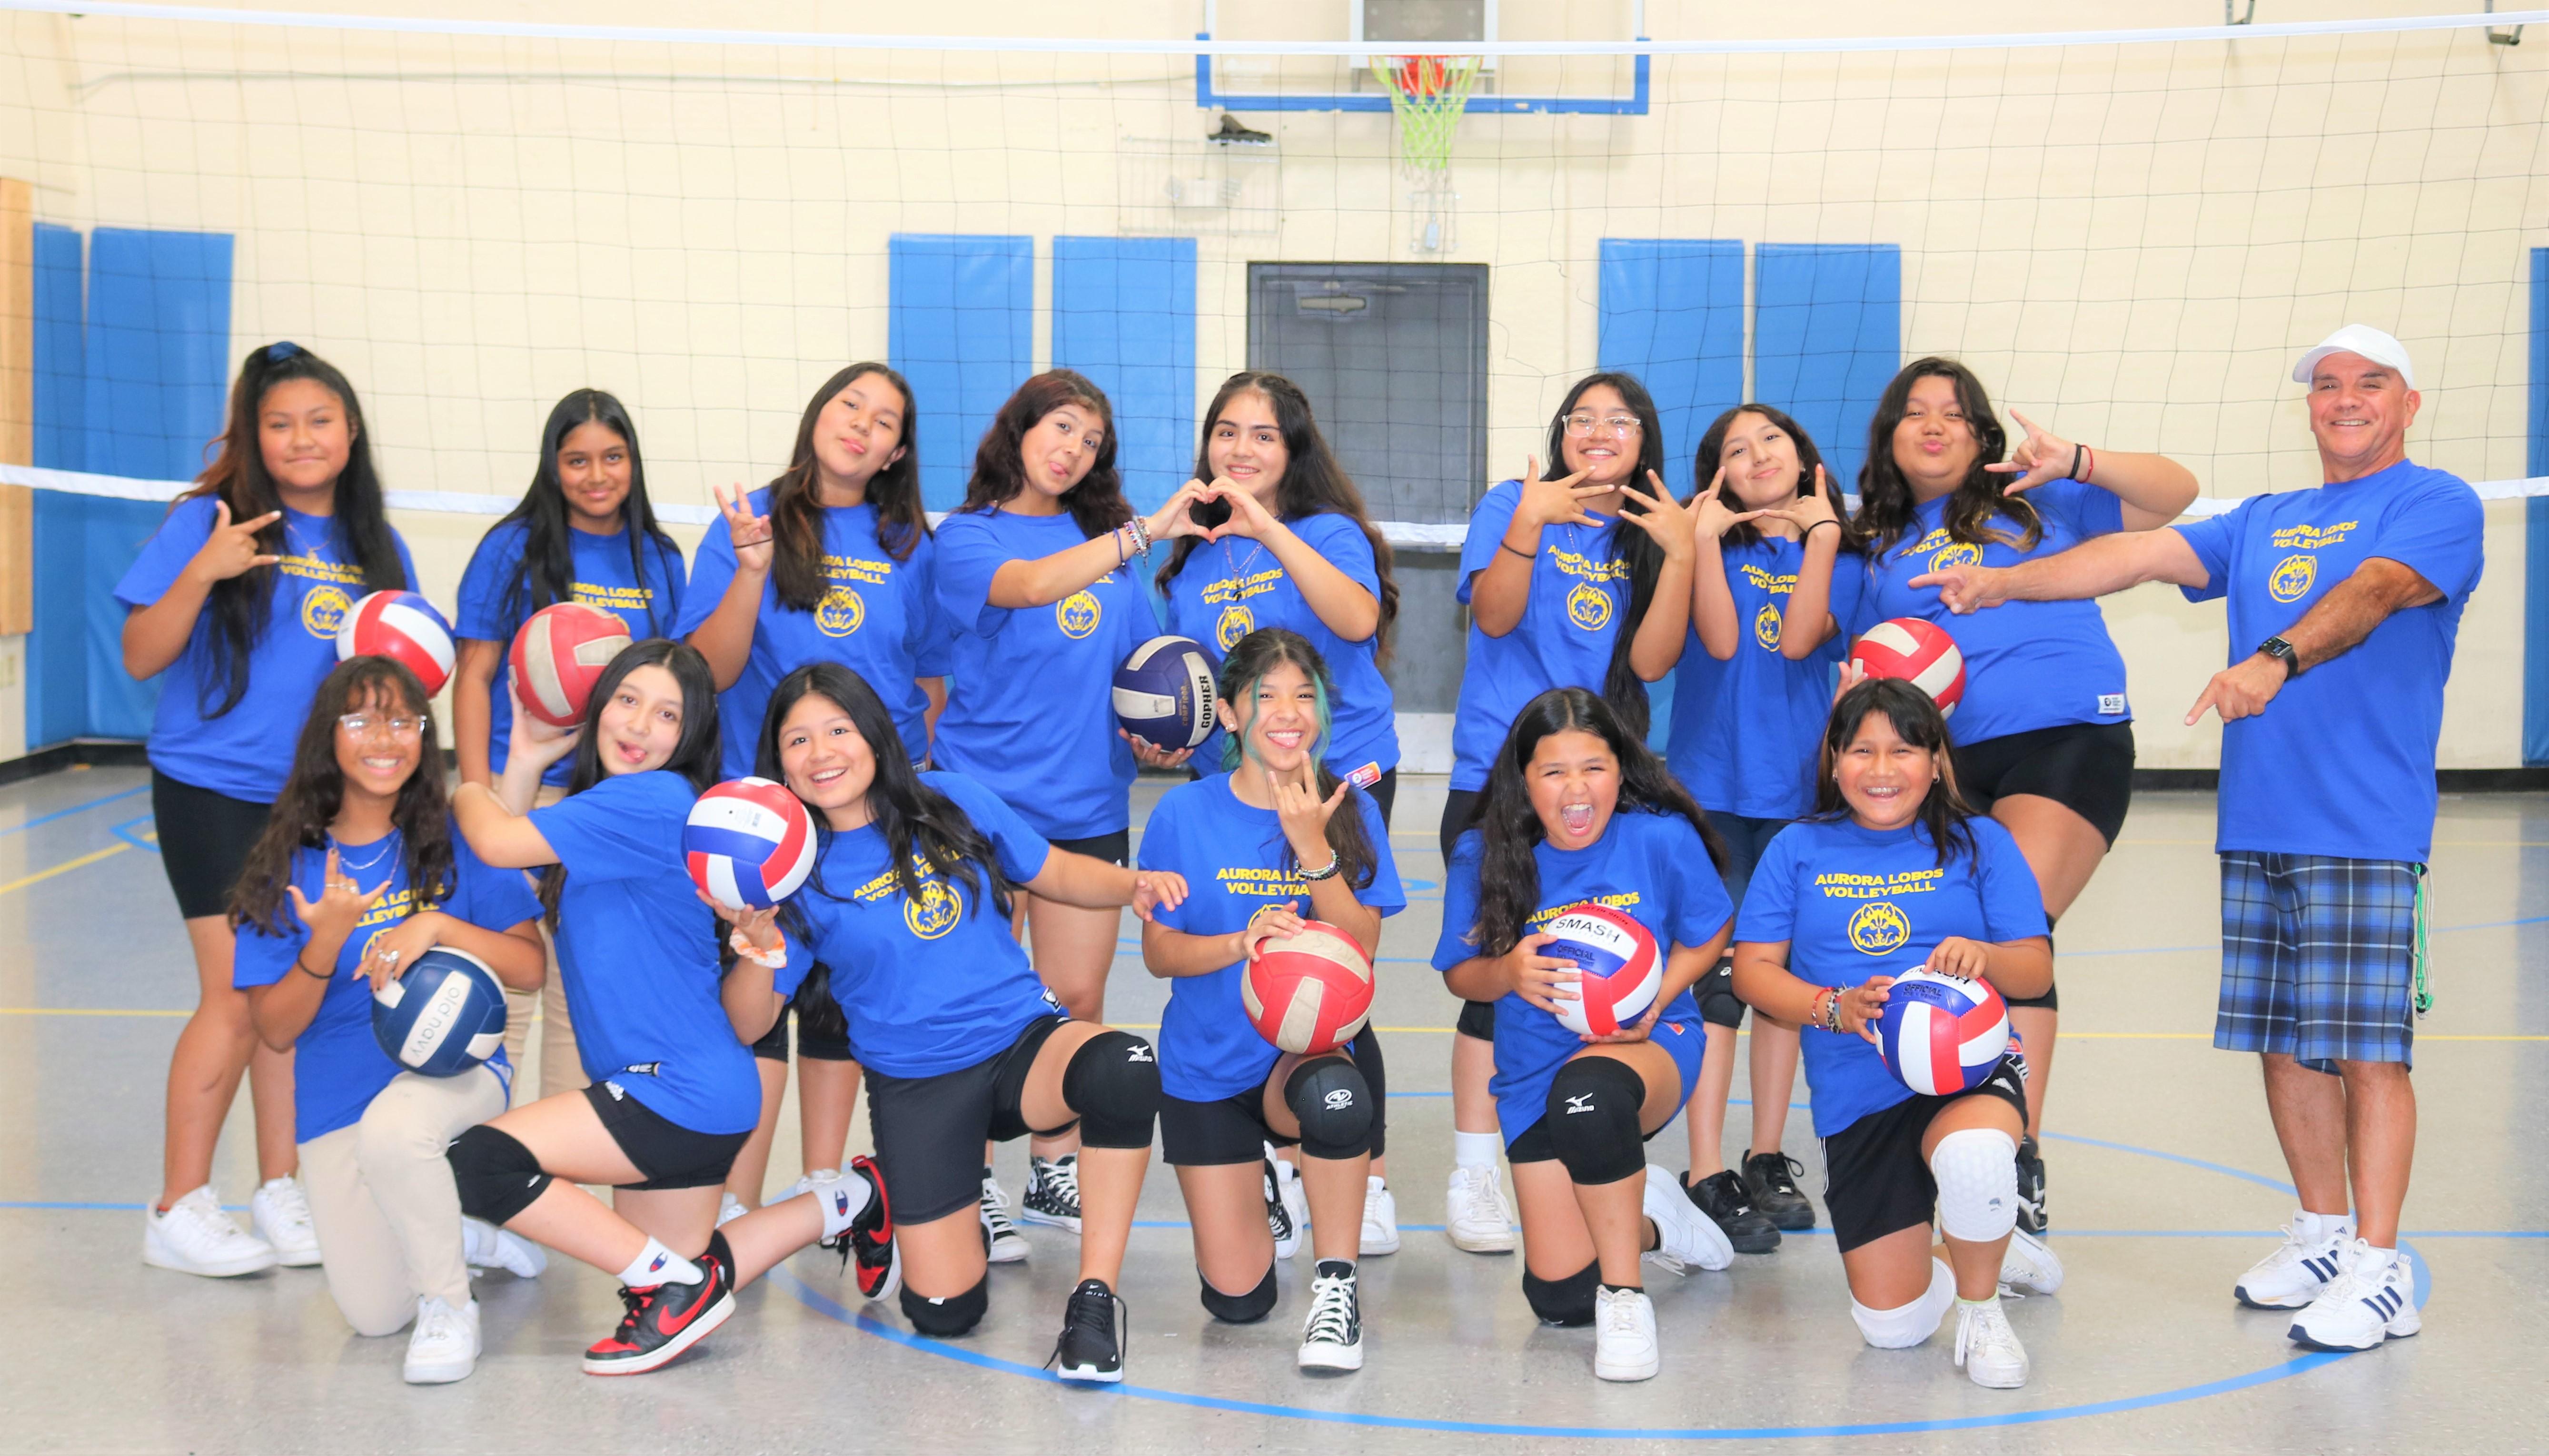 fun volleyball team